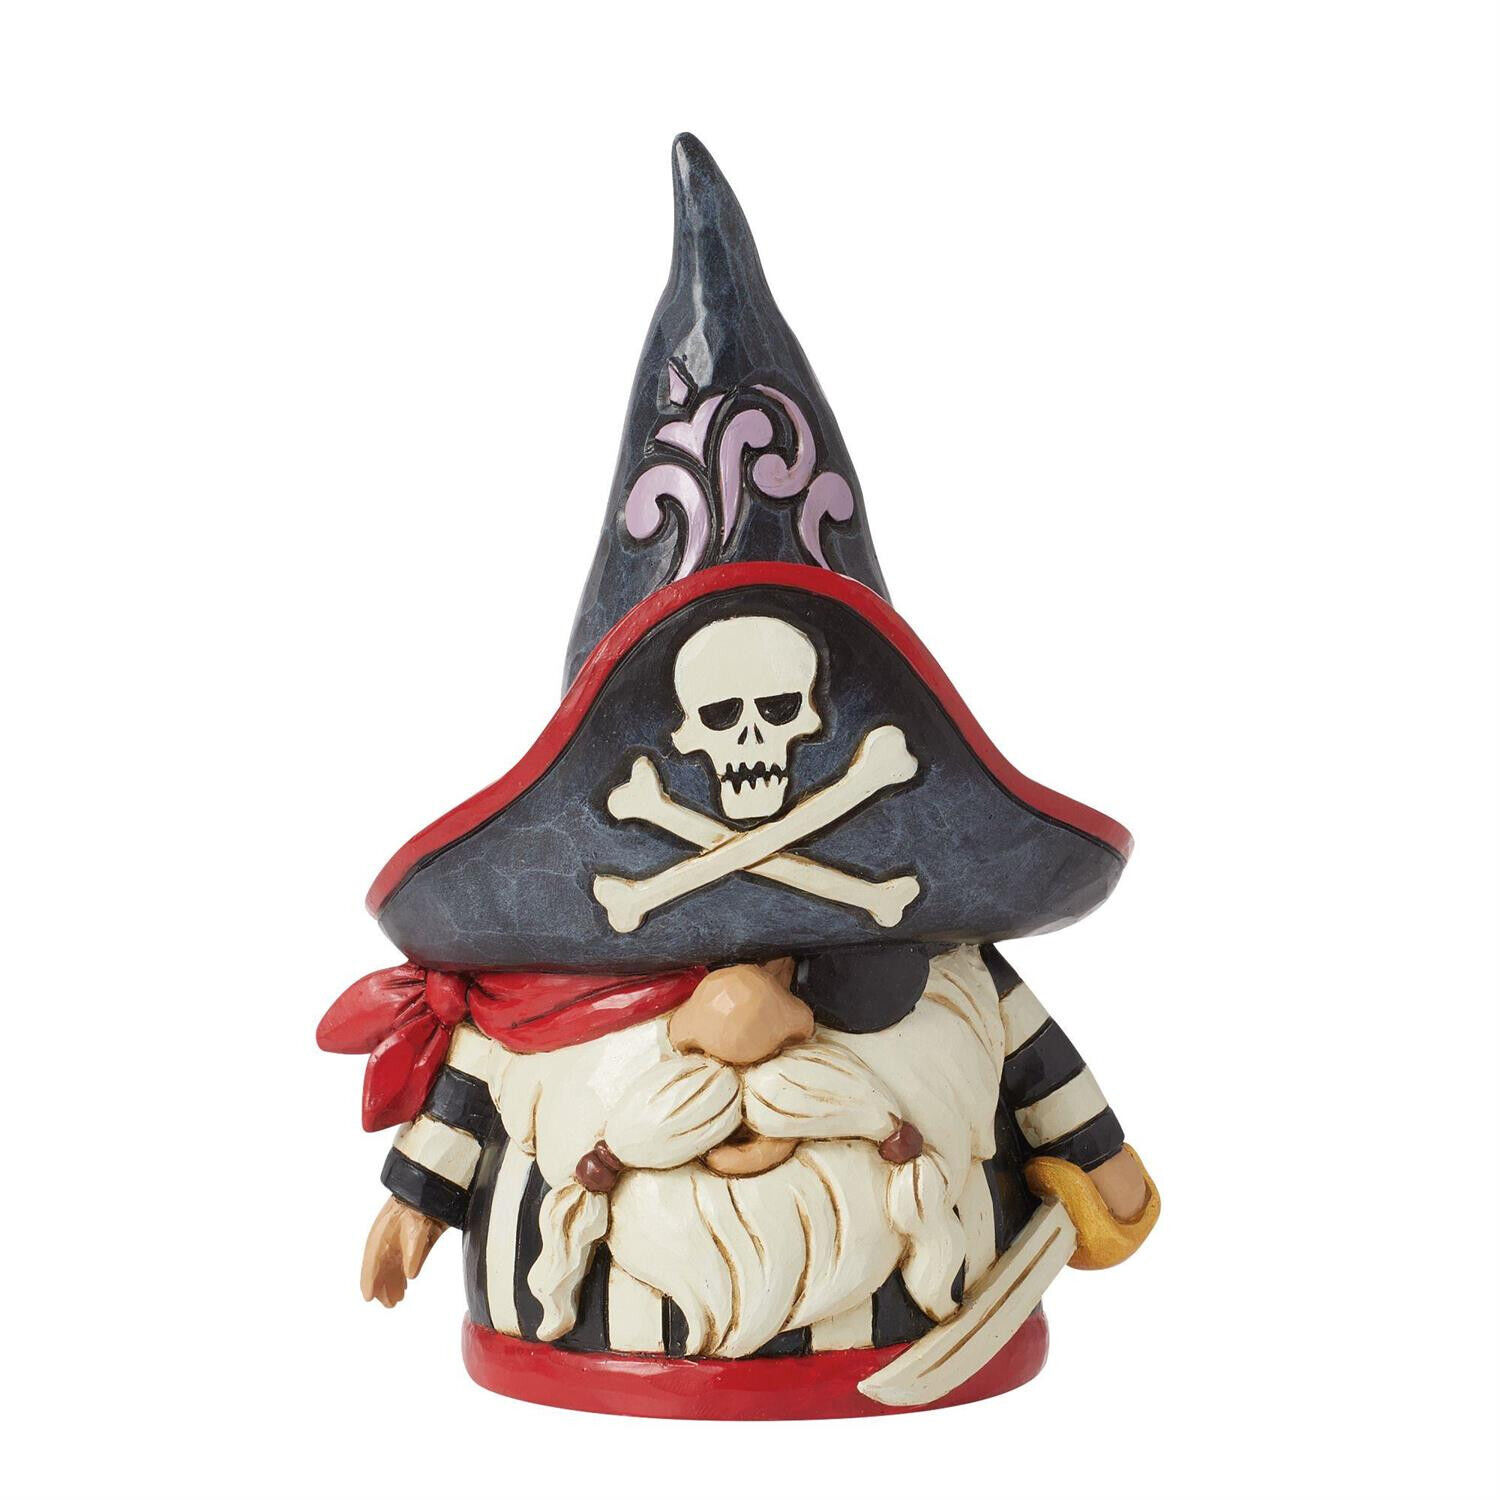 Jim Shore 6014498 Pirate Gnome Figurine Skull Cross Bones Hat Sword 5.7”H